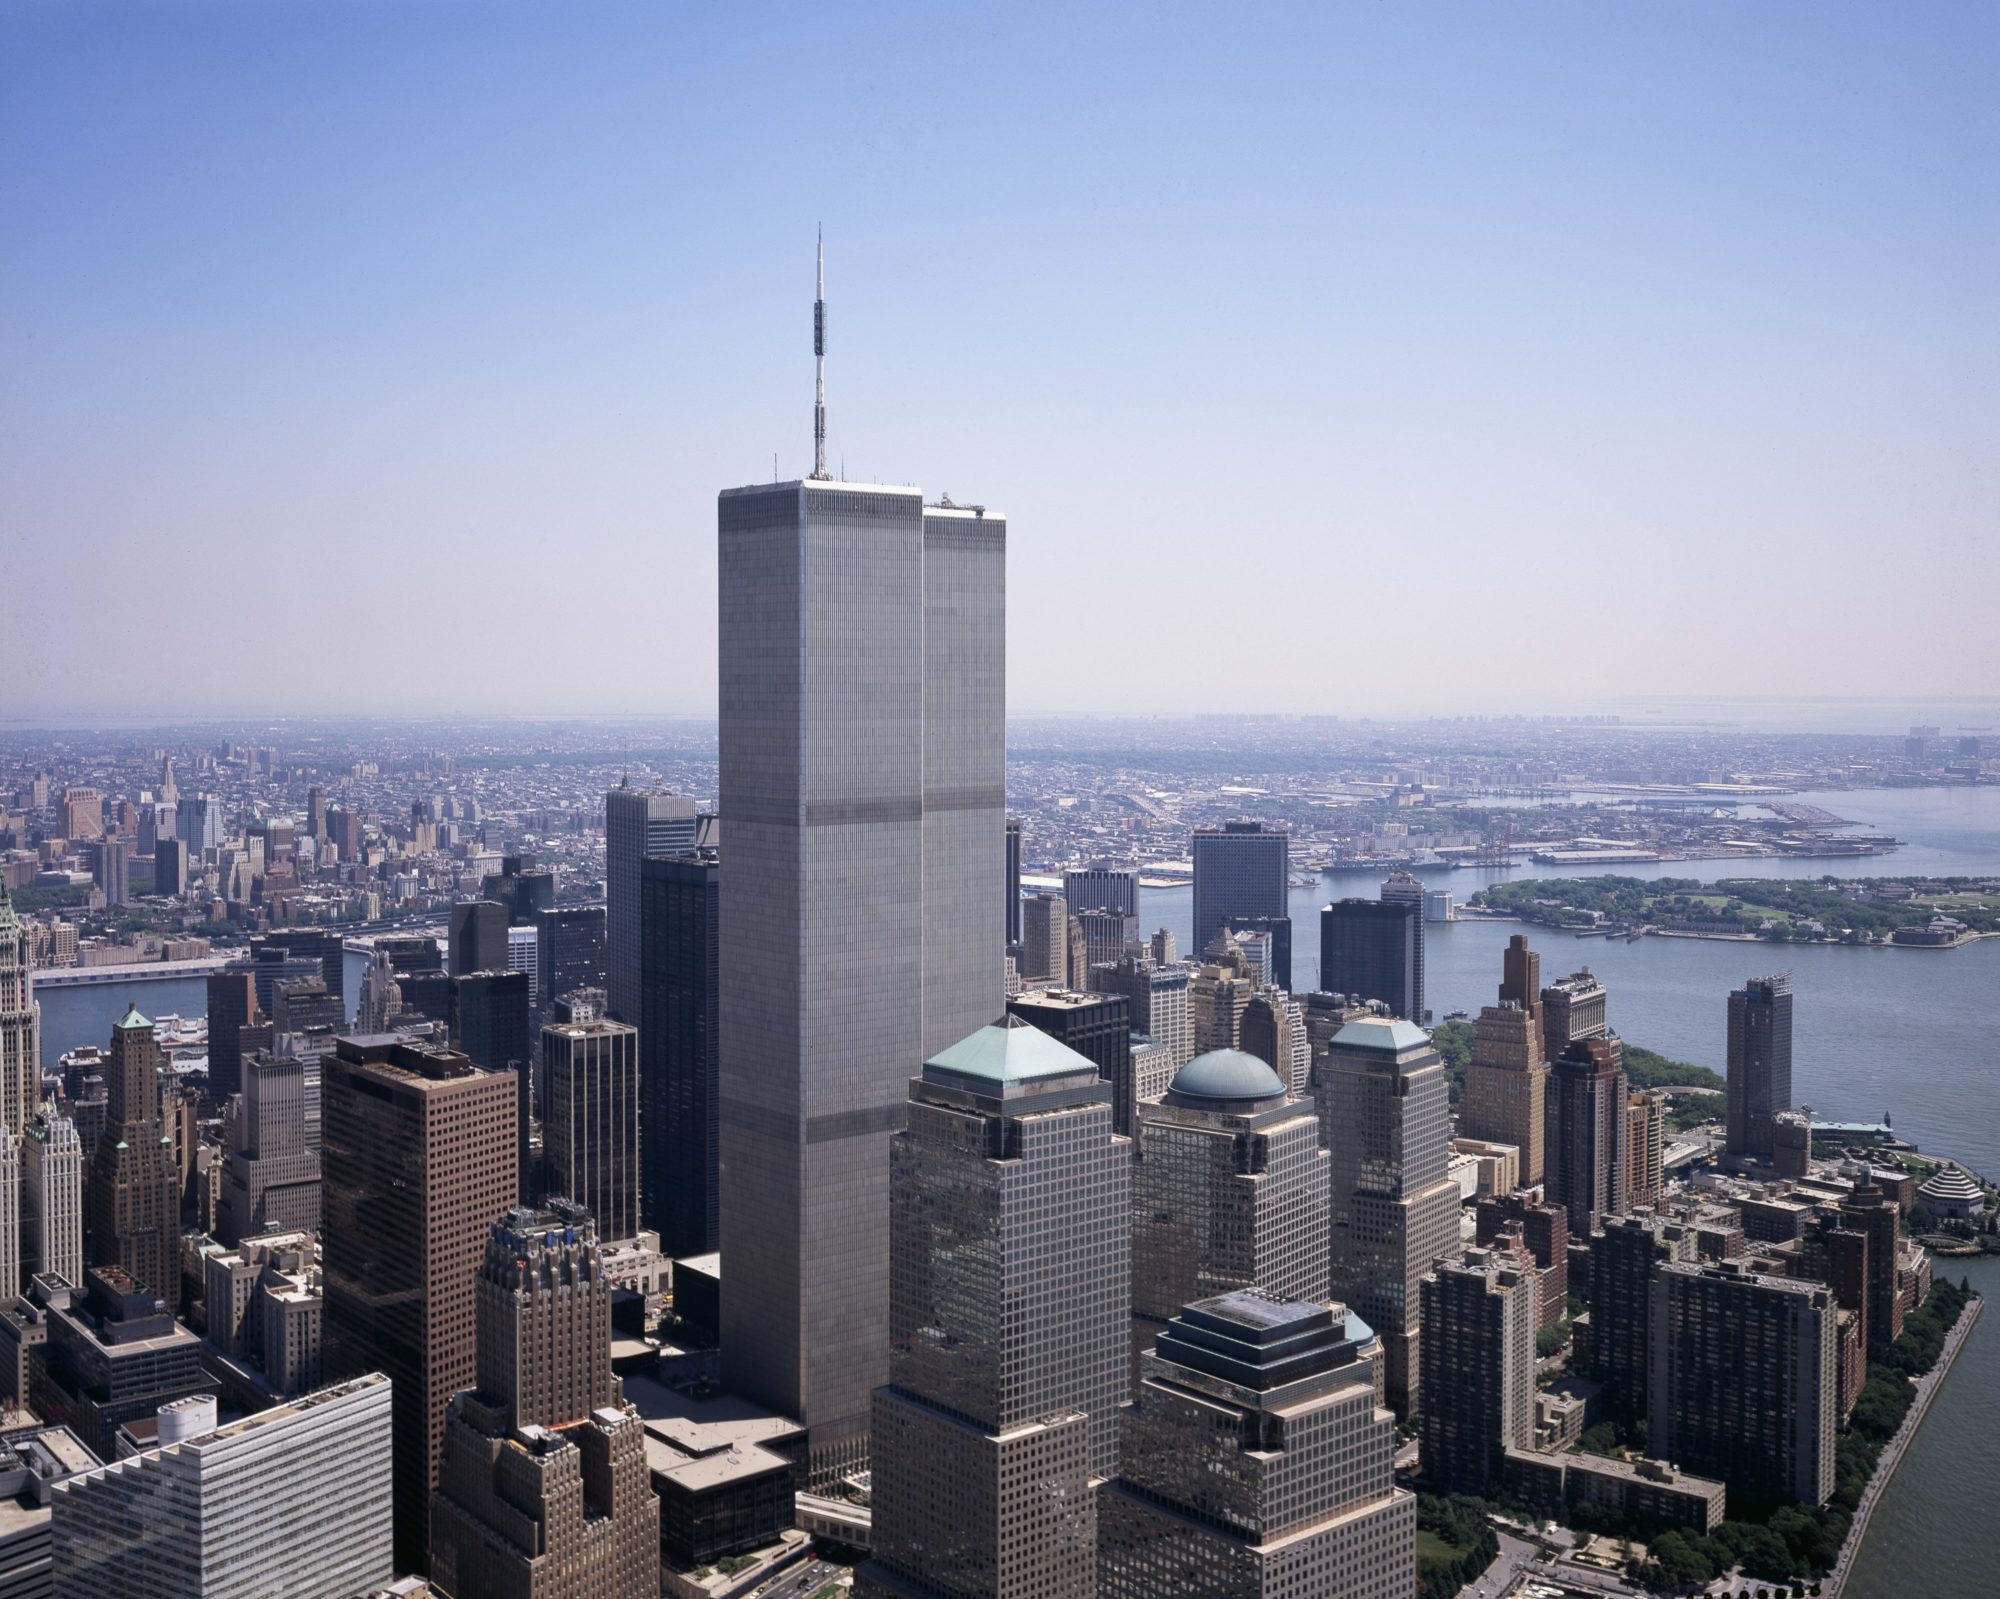 Al-Qaeda’s First Attack on the World Trade Center: A Quarter-Century of War 1993